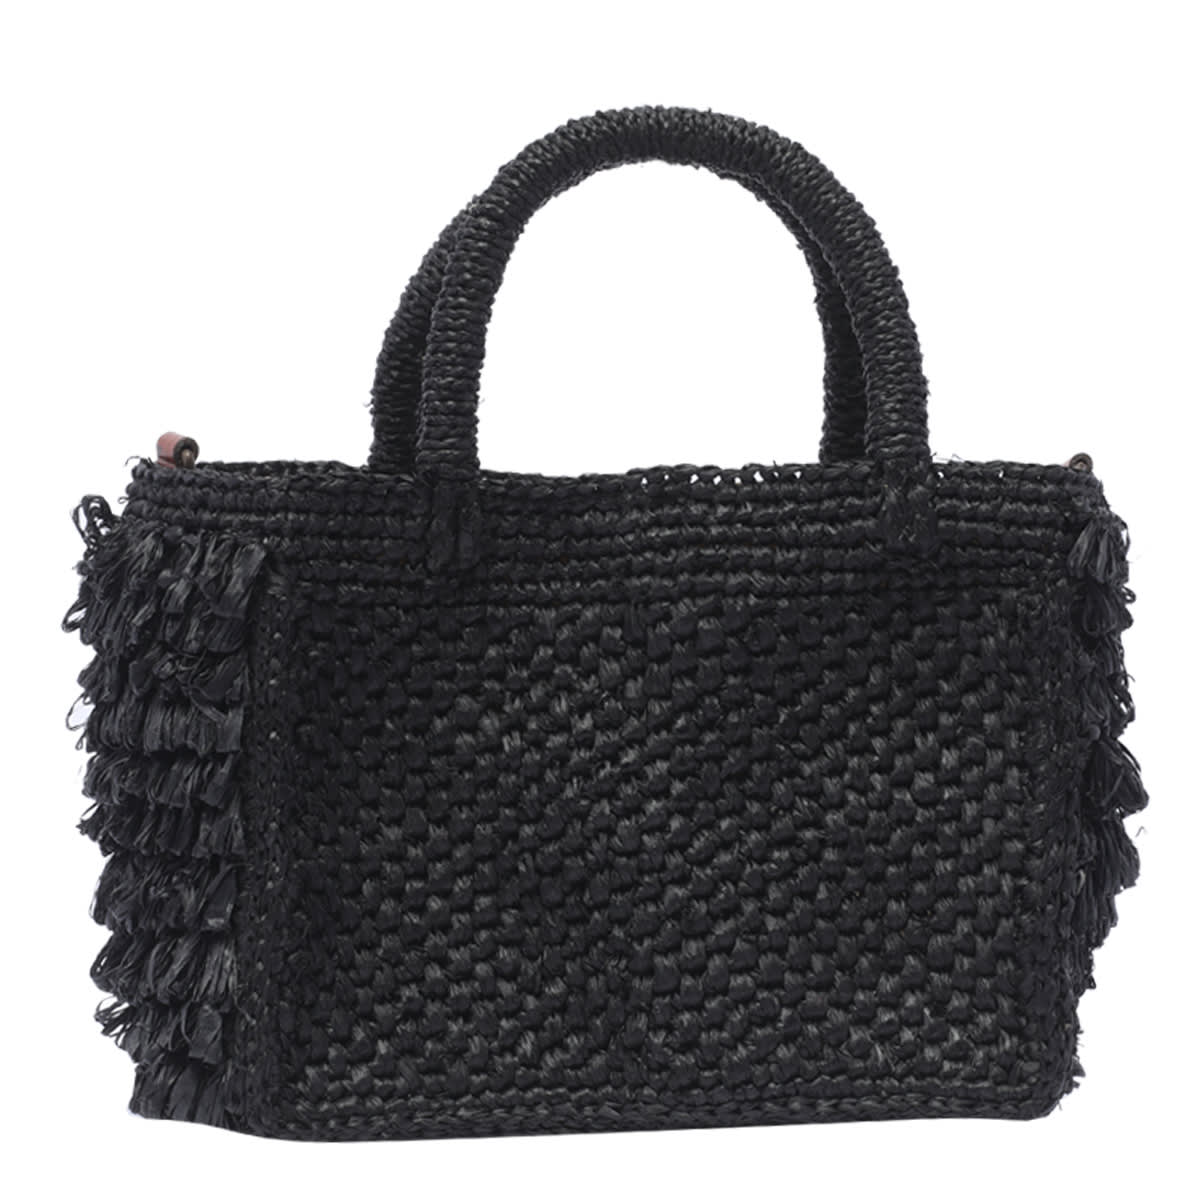 Ibeliv Cocktail Handbag In Black